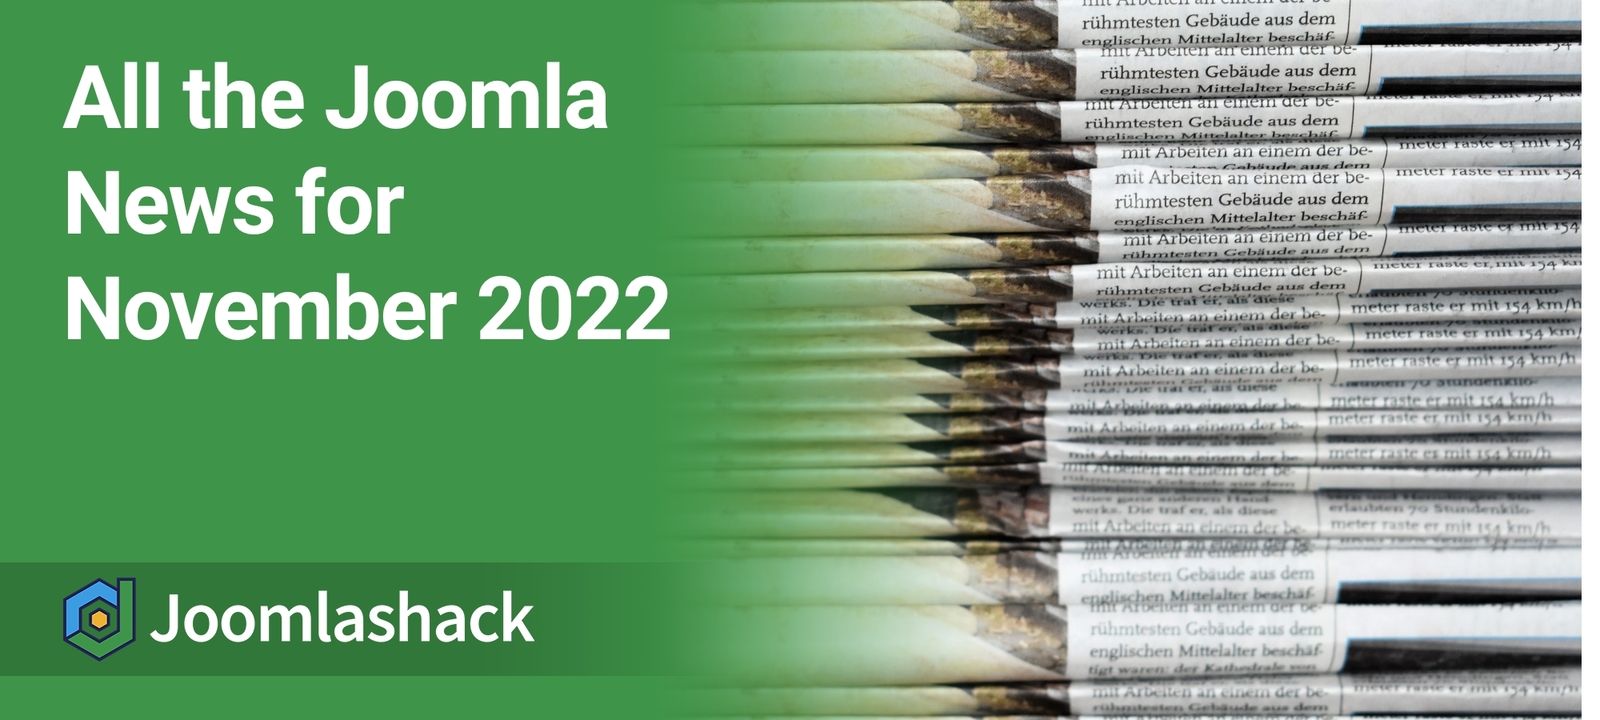 All the Joomla News for November 2022 